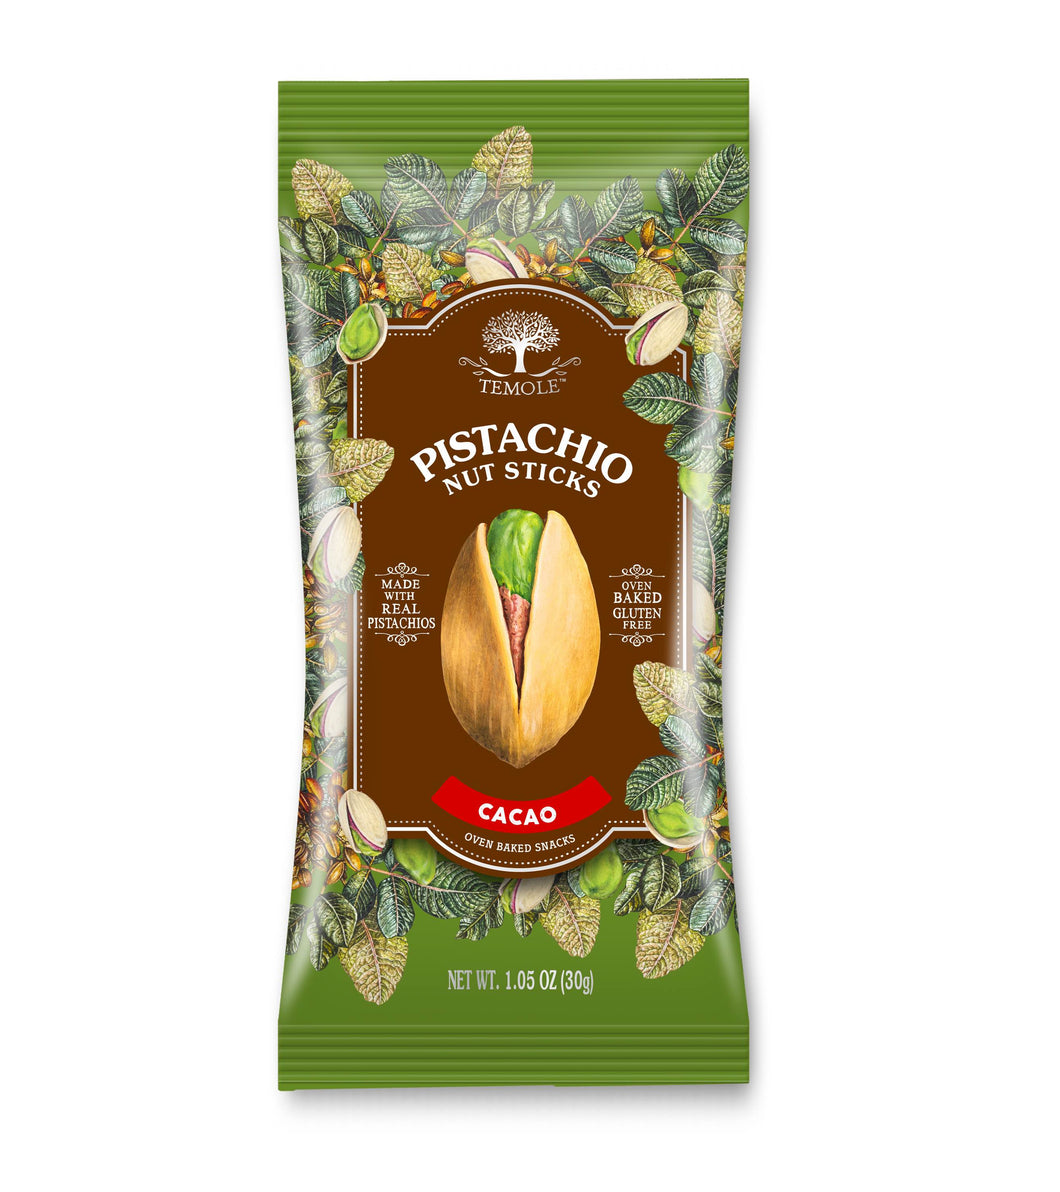 TEMOLE PISTACHIO NUT STICKS Cacao 30g